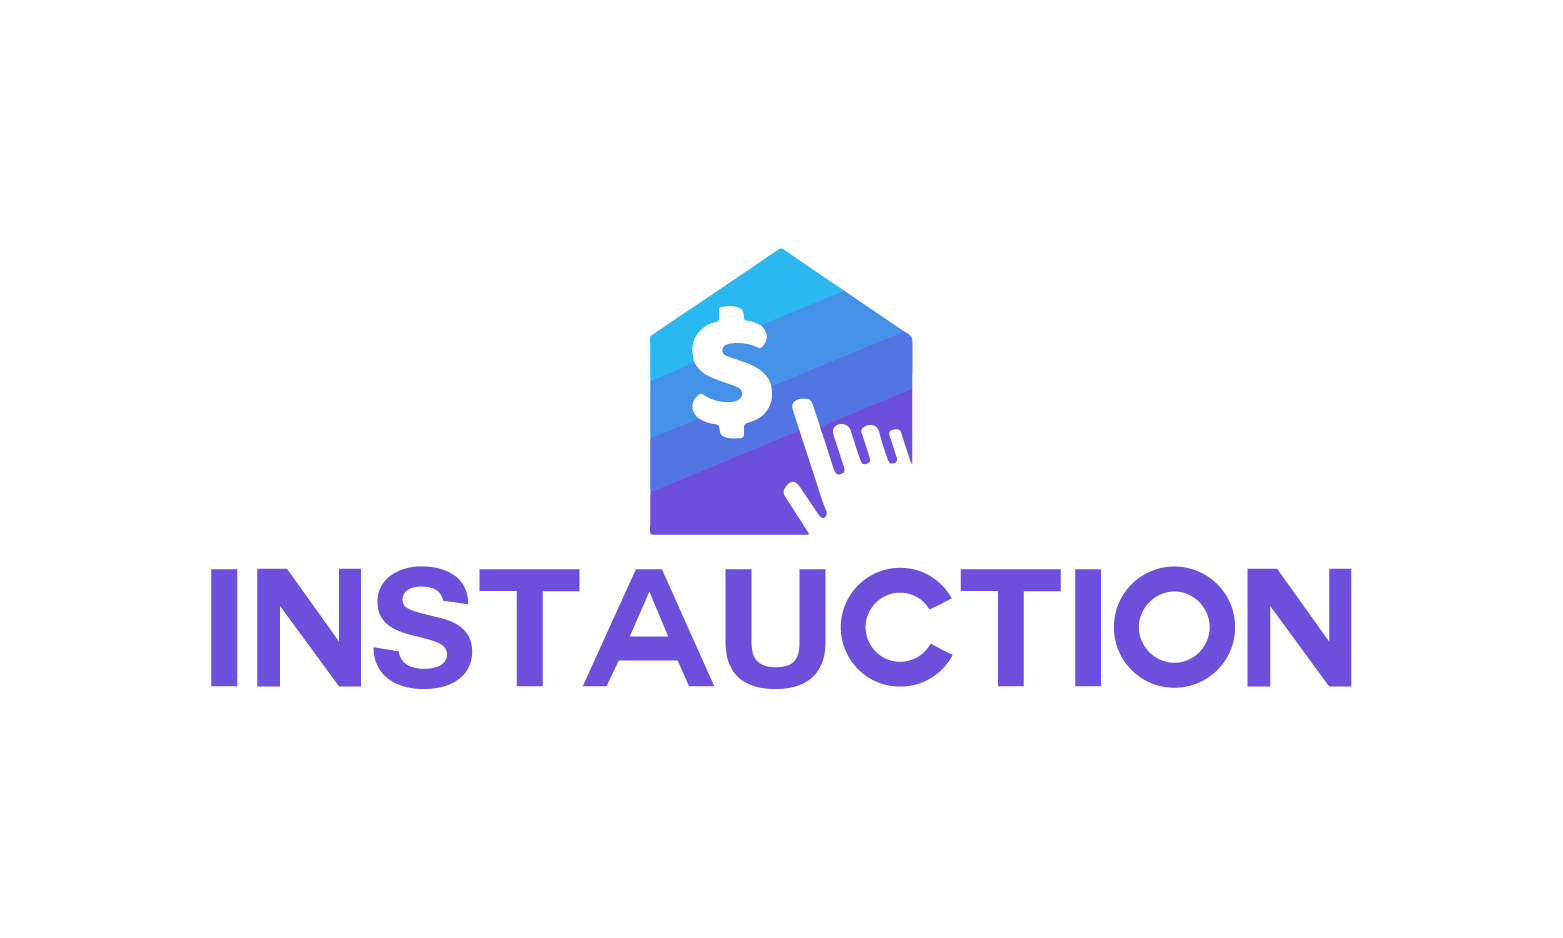 Instauction.com - Creative brandable domain for sale